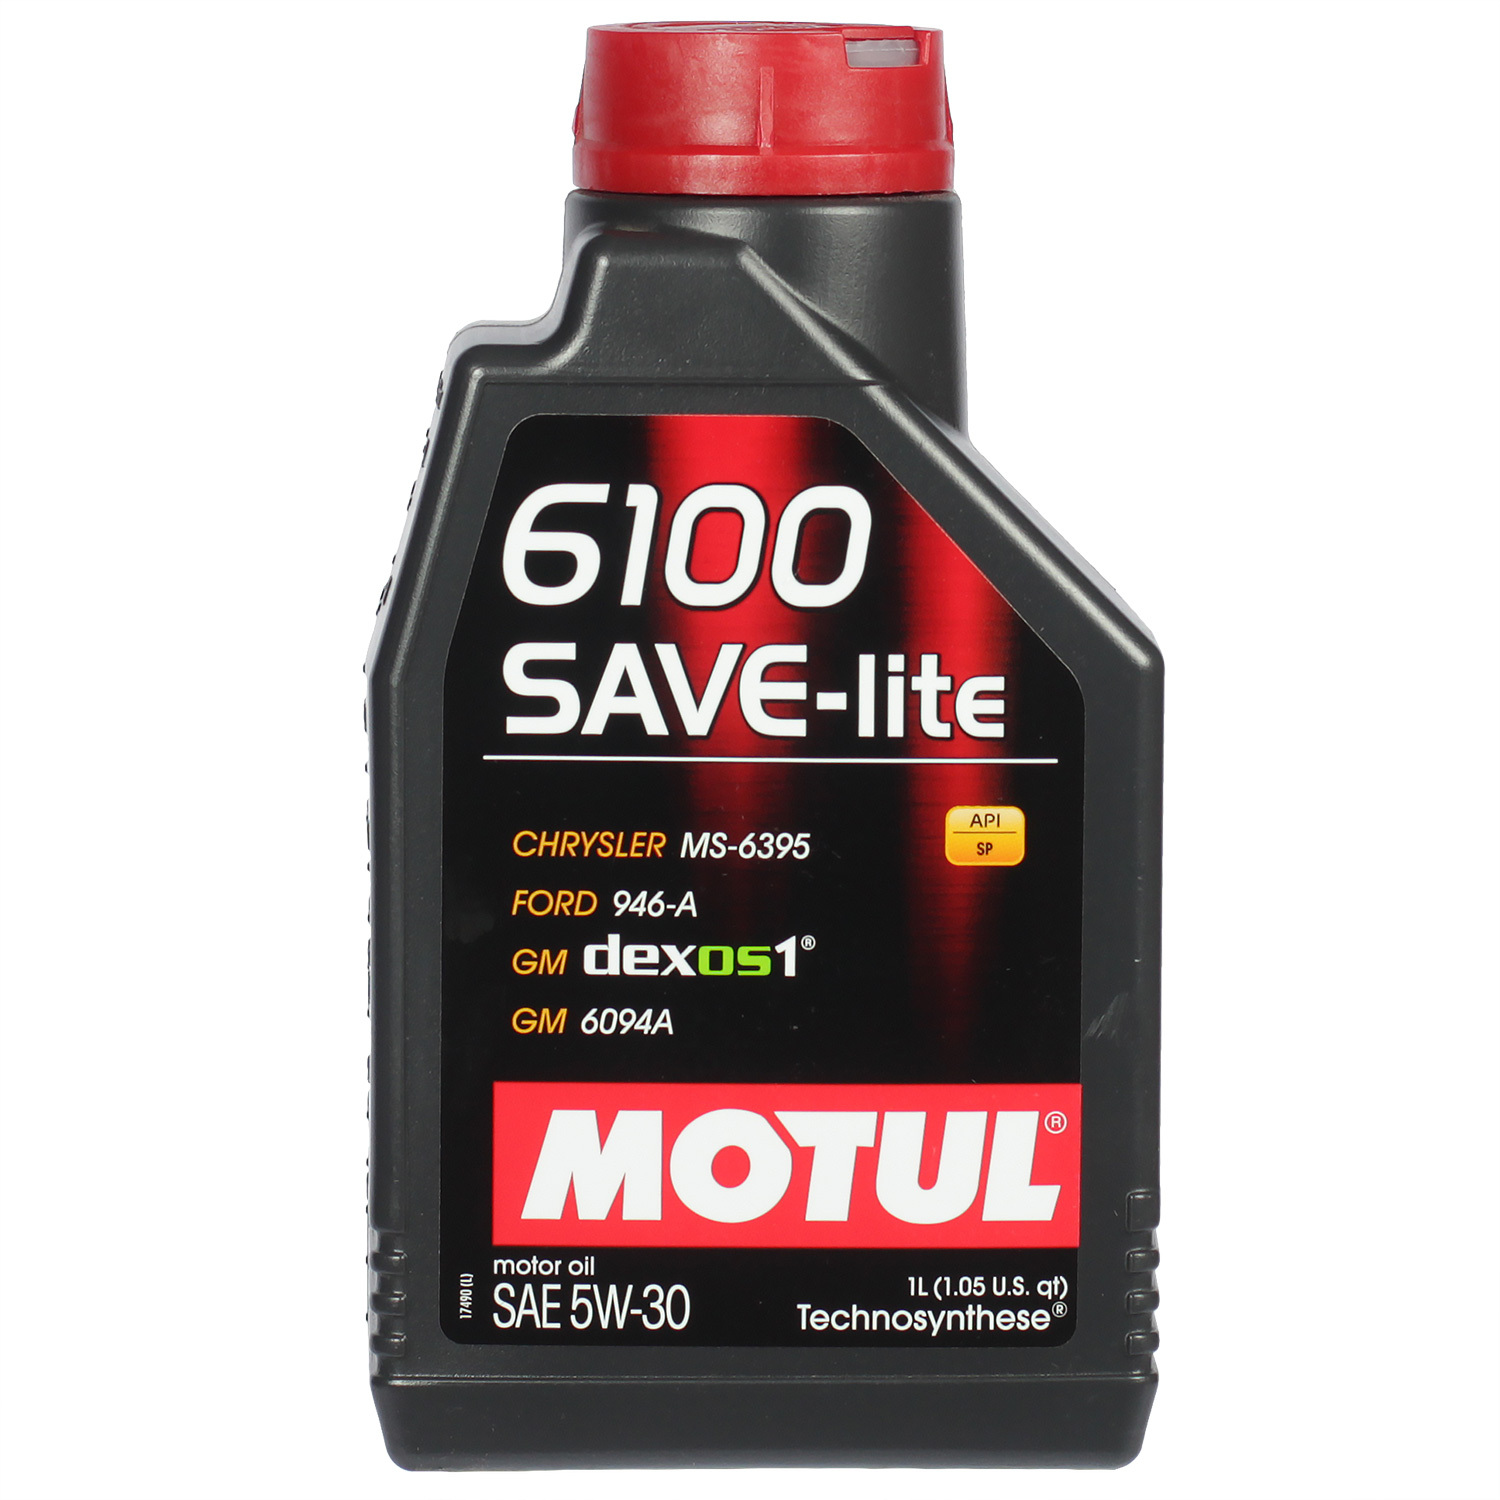 Motul Моторное масло Motul 6100 Save-lite 5W-30, 1 л motul моторное масло motul 6100 save lite 5w 30 4 л